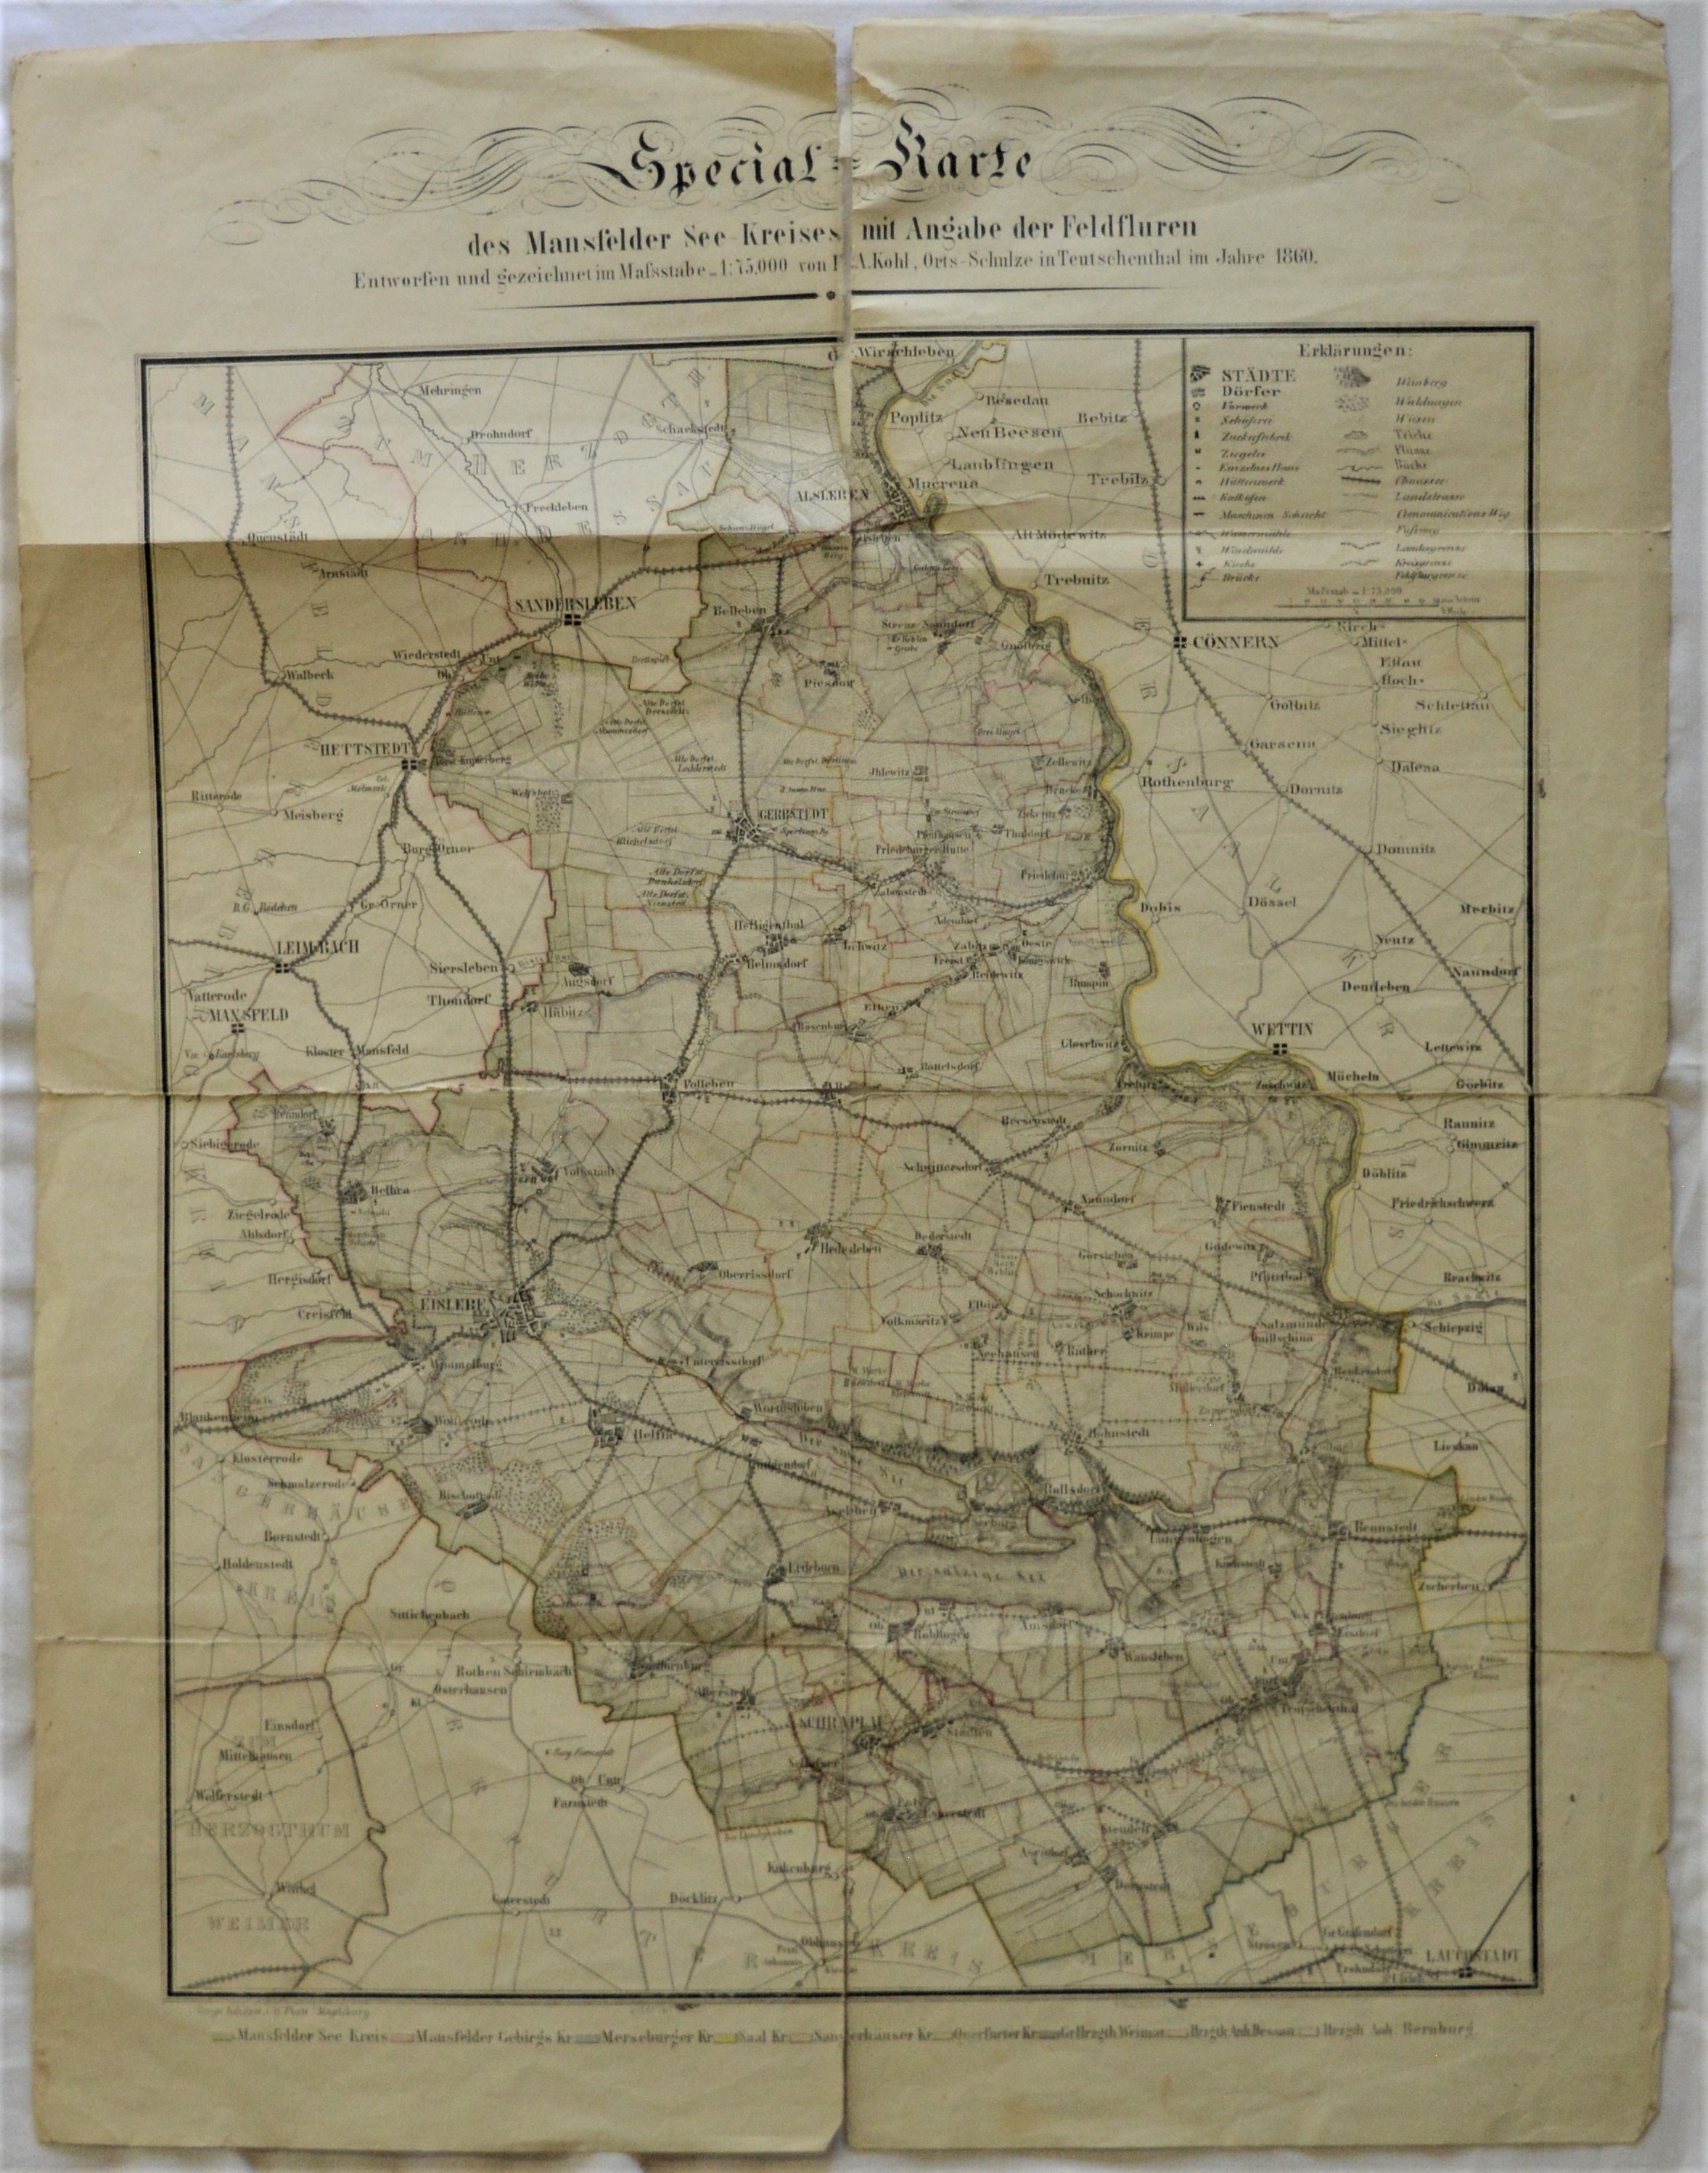 Spezial-Karte des Mansfelder See Kreises mit Angabe der Feldfluren (Mansfeld-Museum im Humboldt-Schloss CC BY-NC-SA)